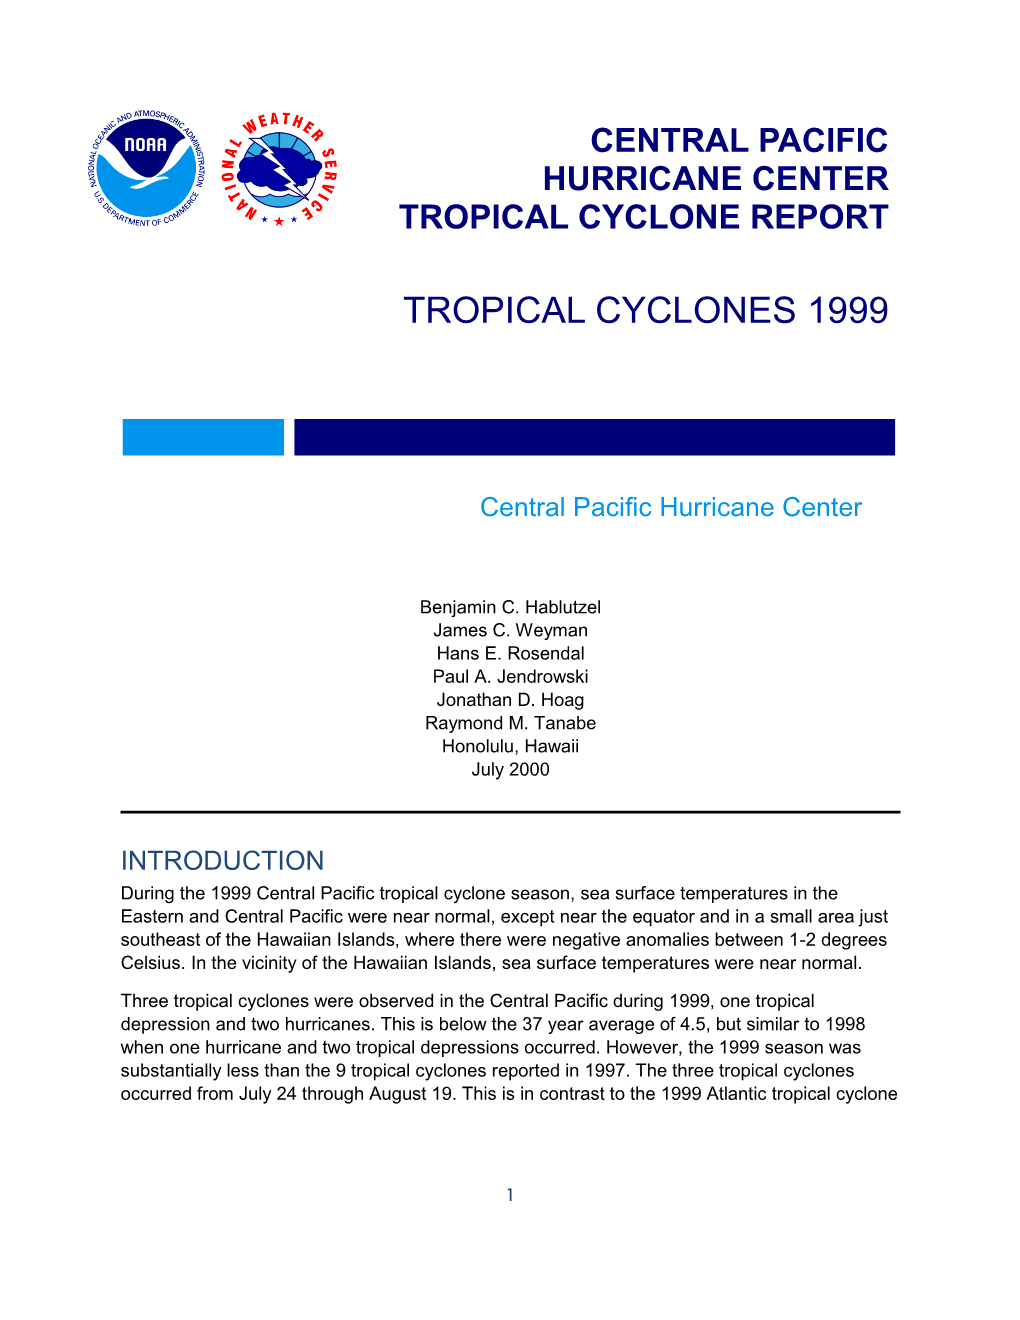 Tropical Cyclones 1999